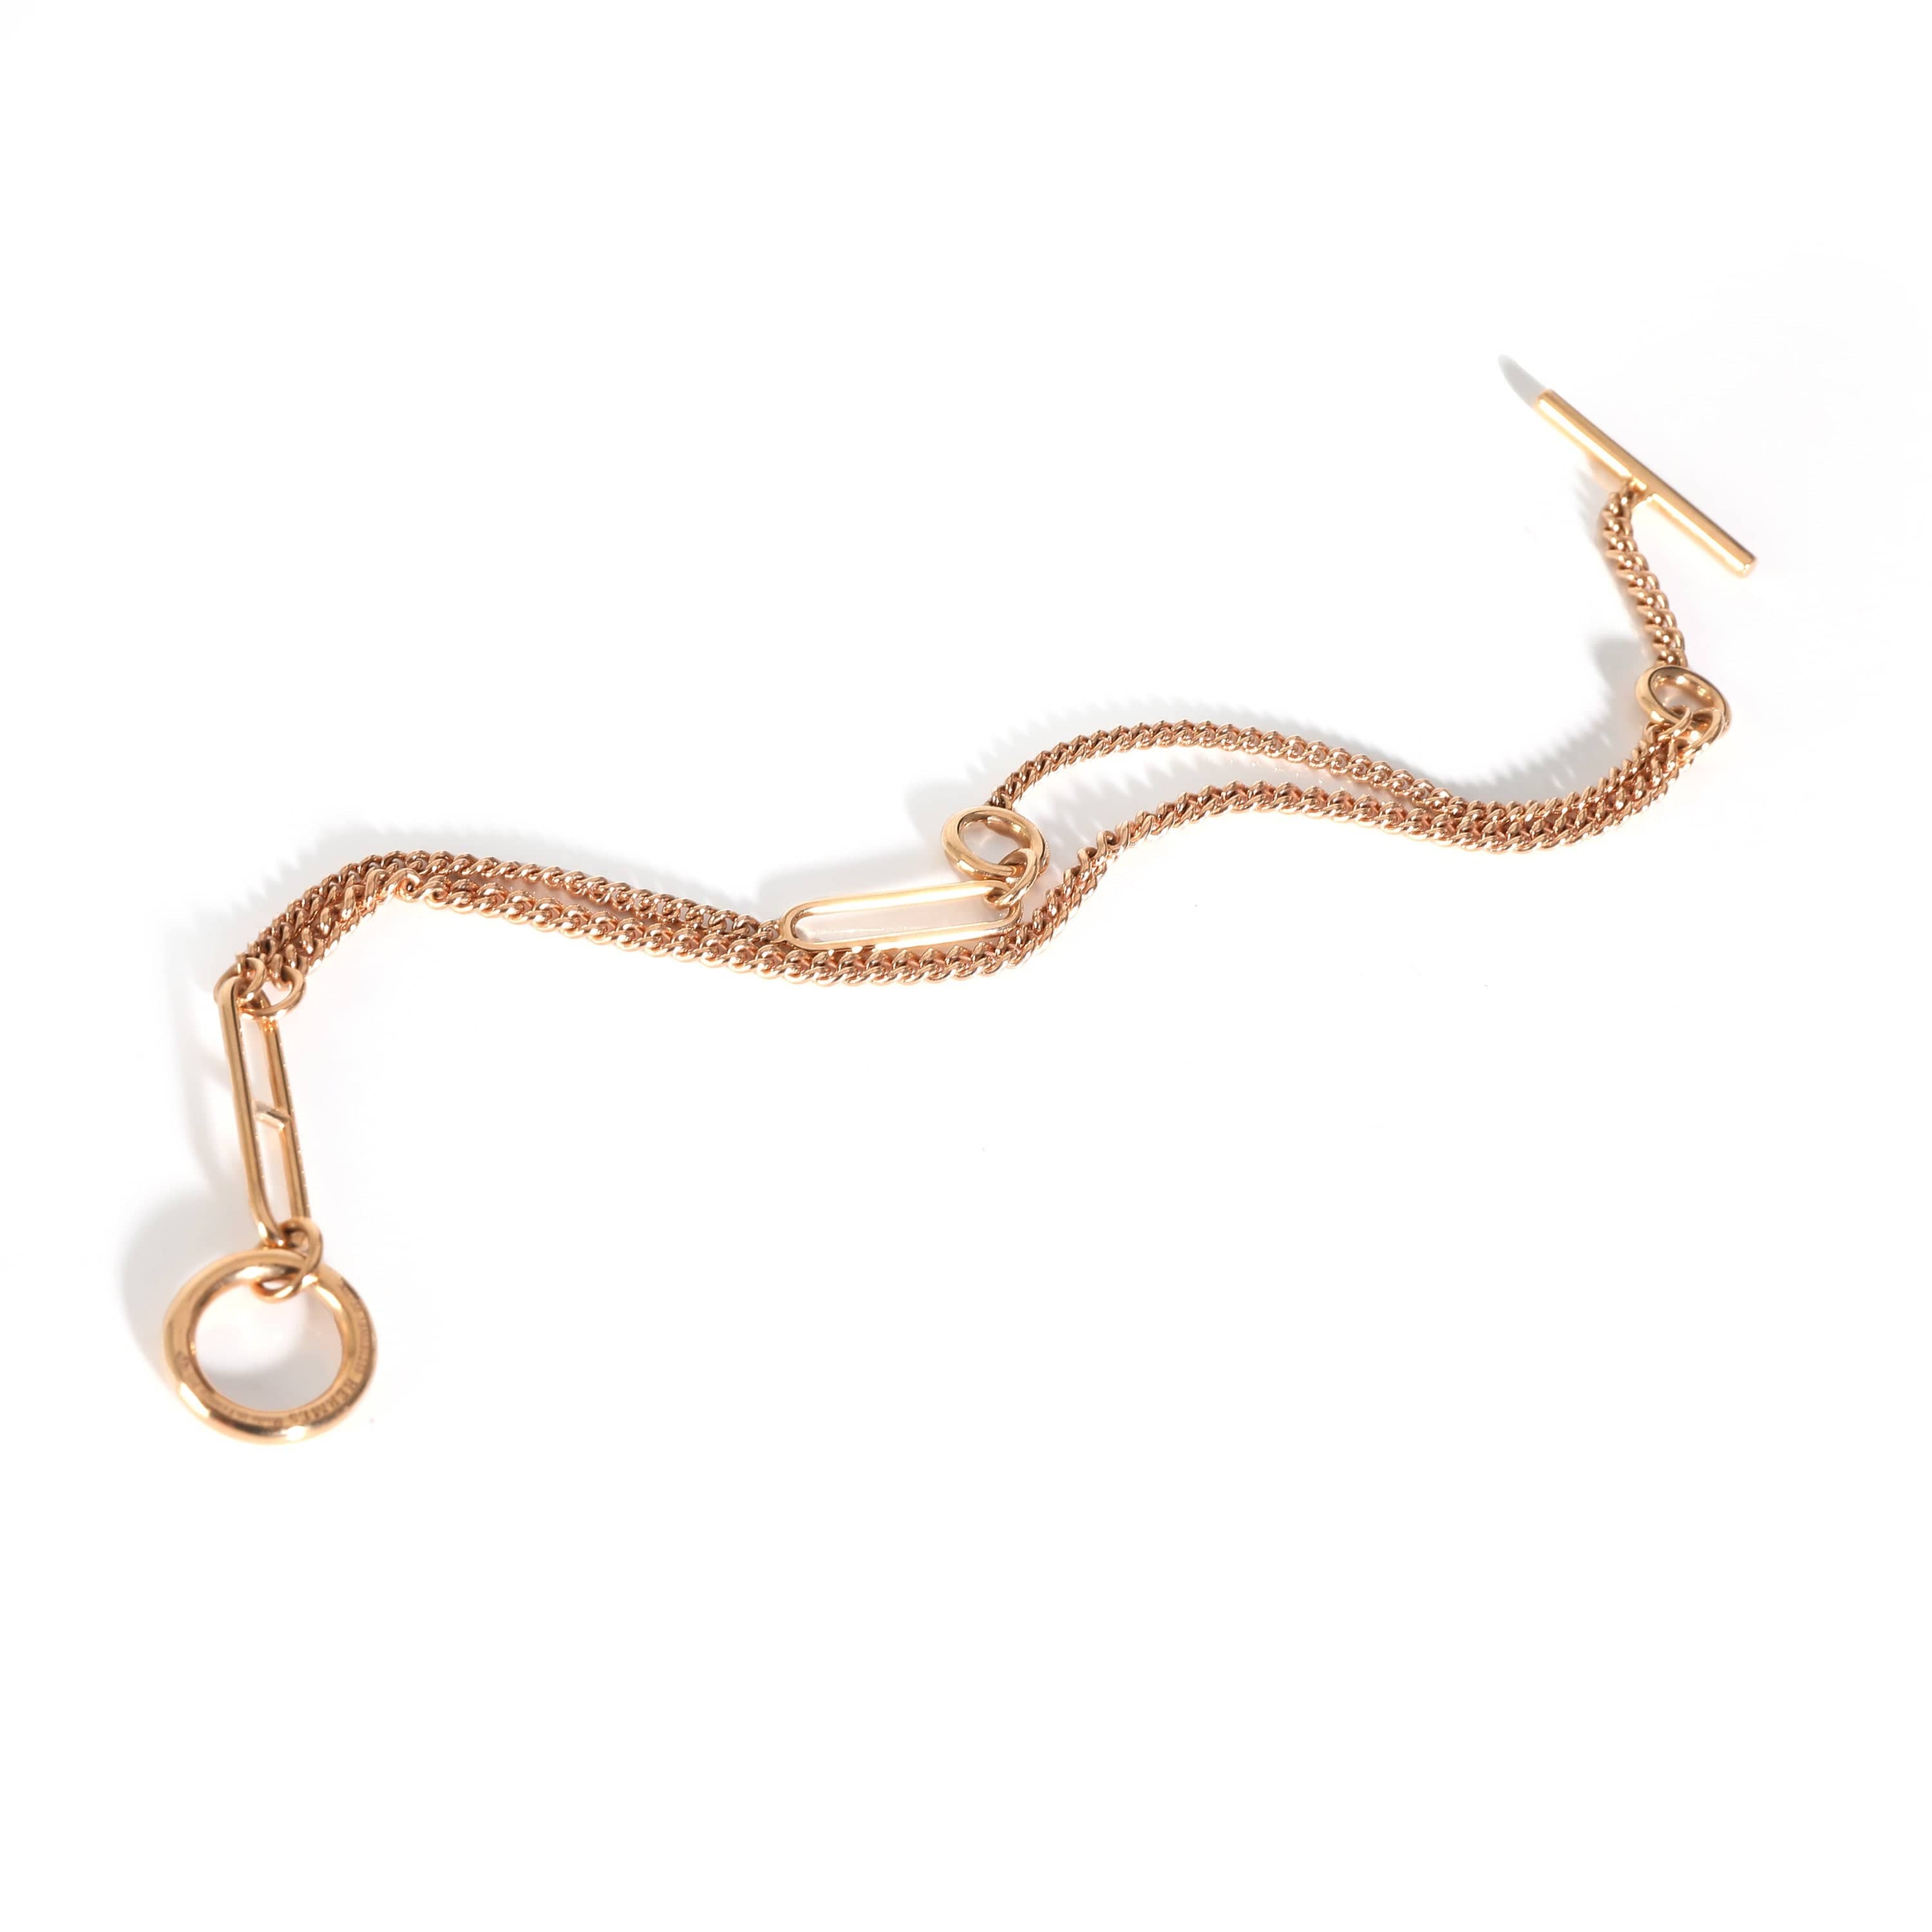 Hermès Hermès Echappee Bracelet in 18k 18K Rose Gold